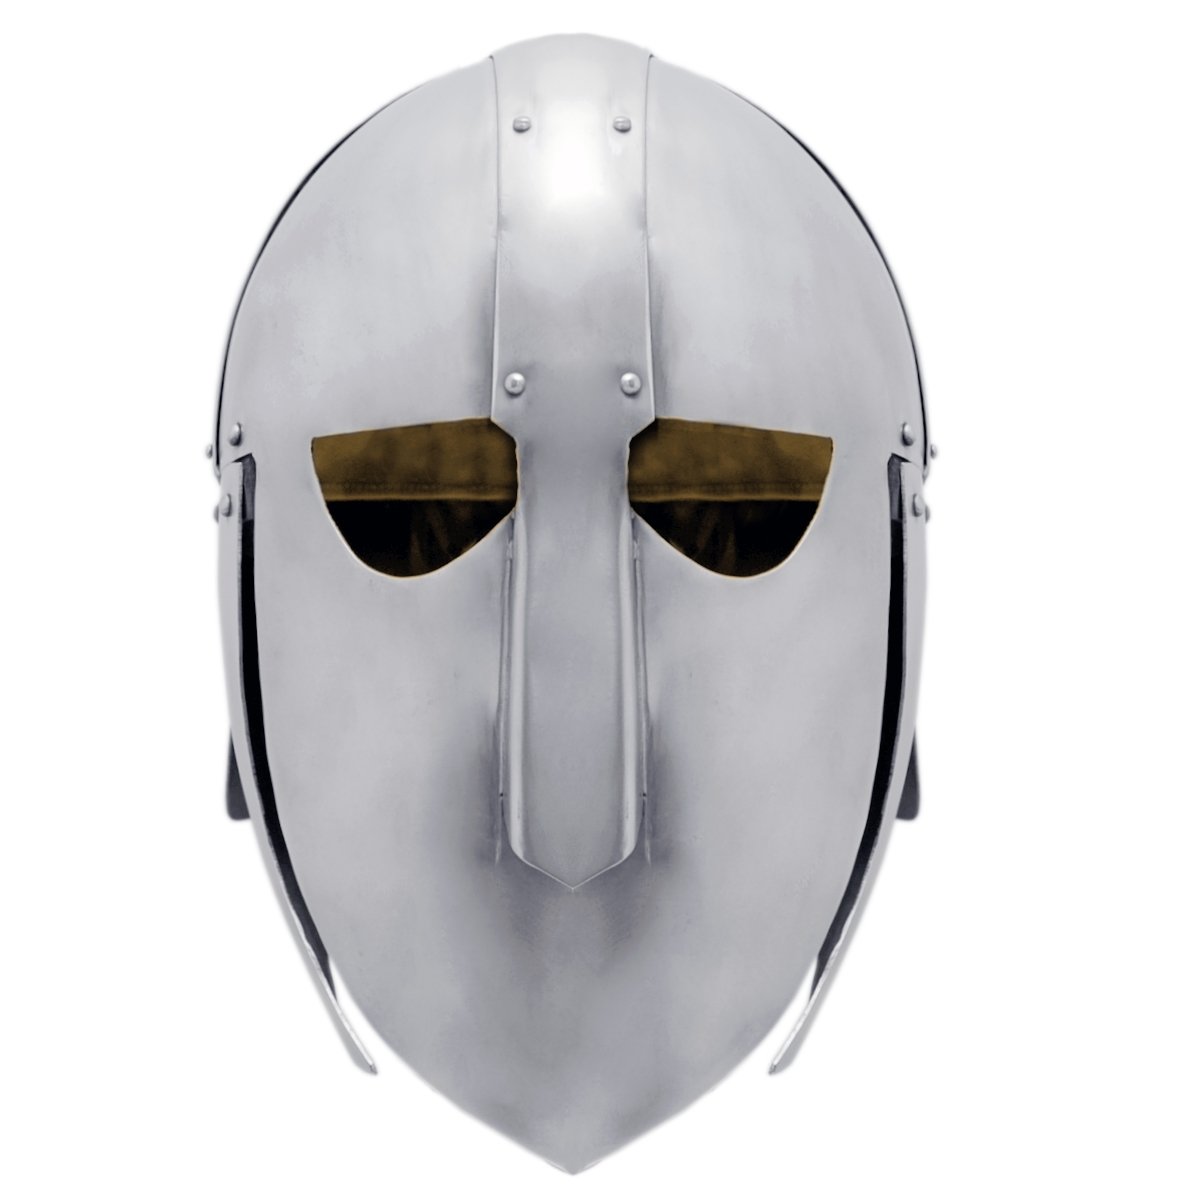 Sutton Hoo Helmet -16 G Iron w/leather liner